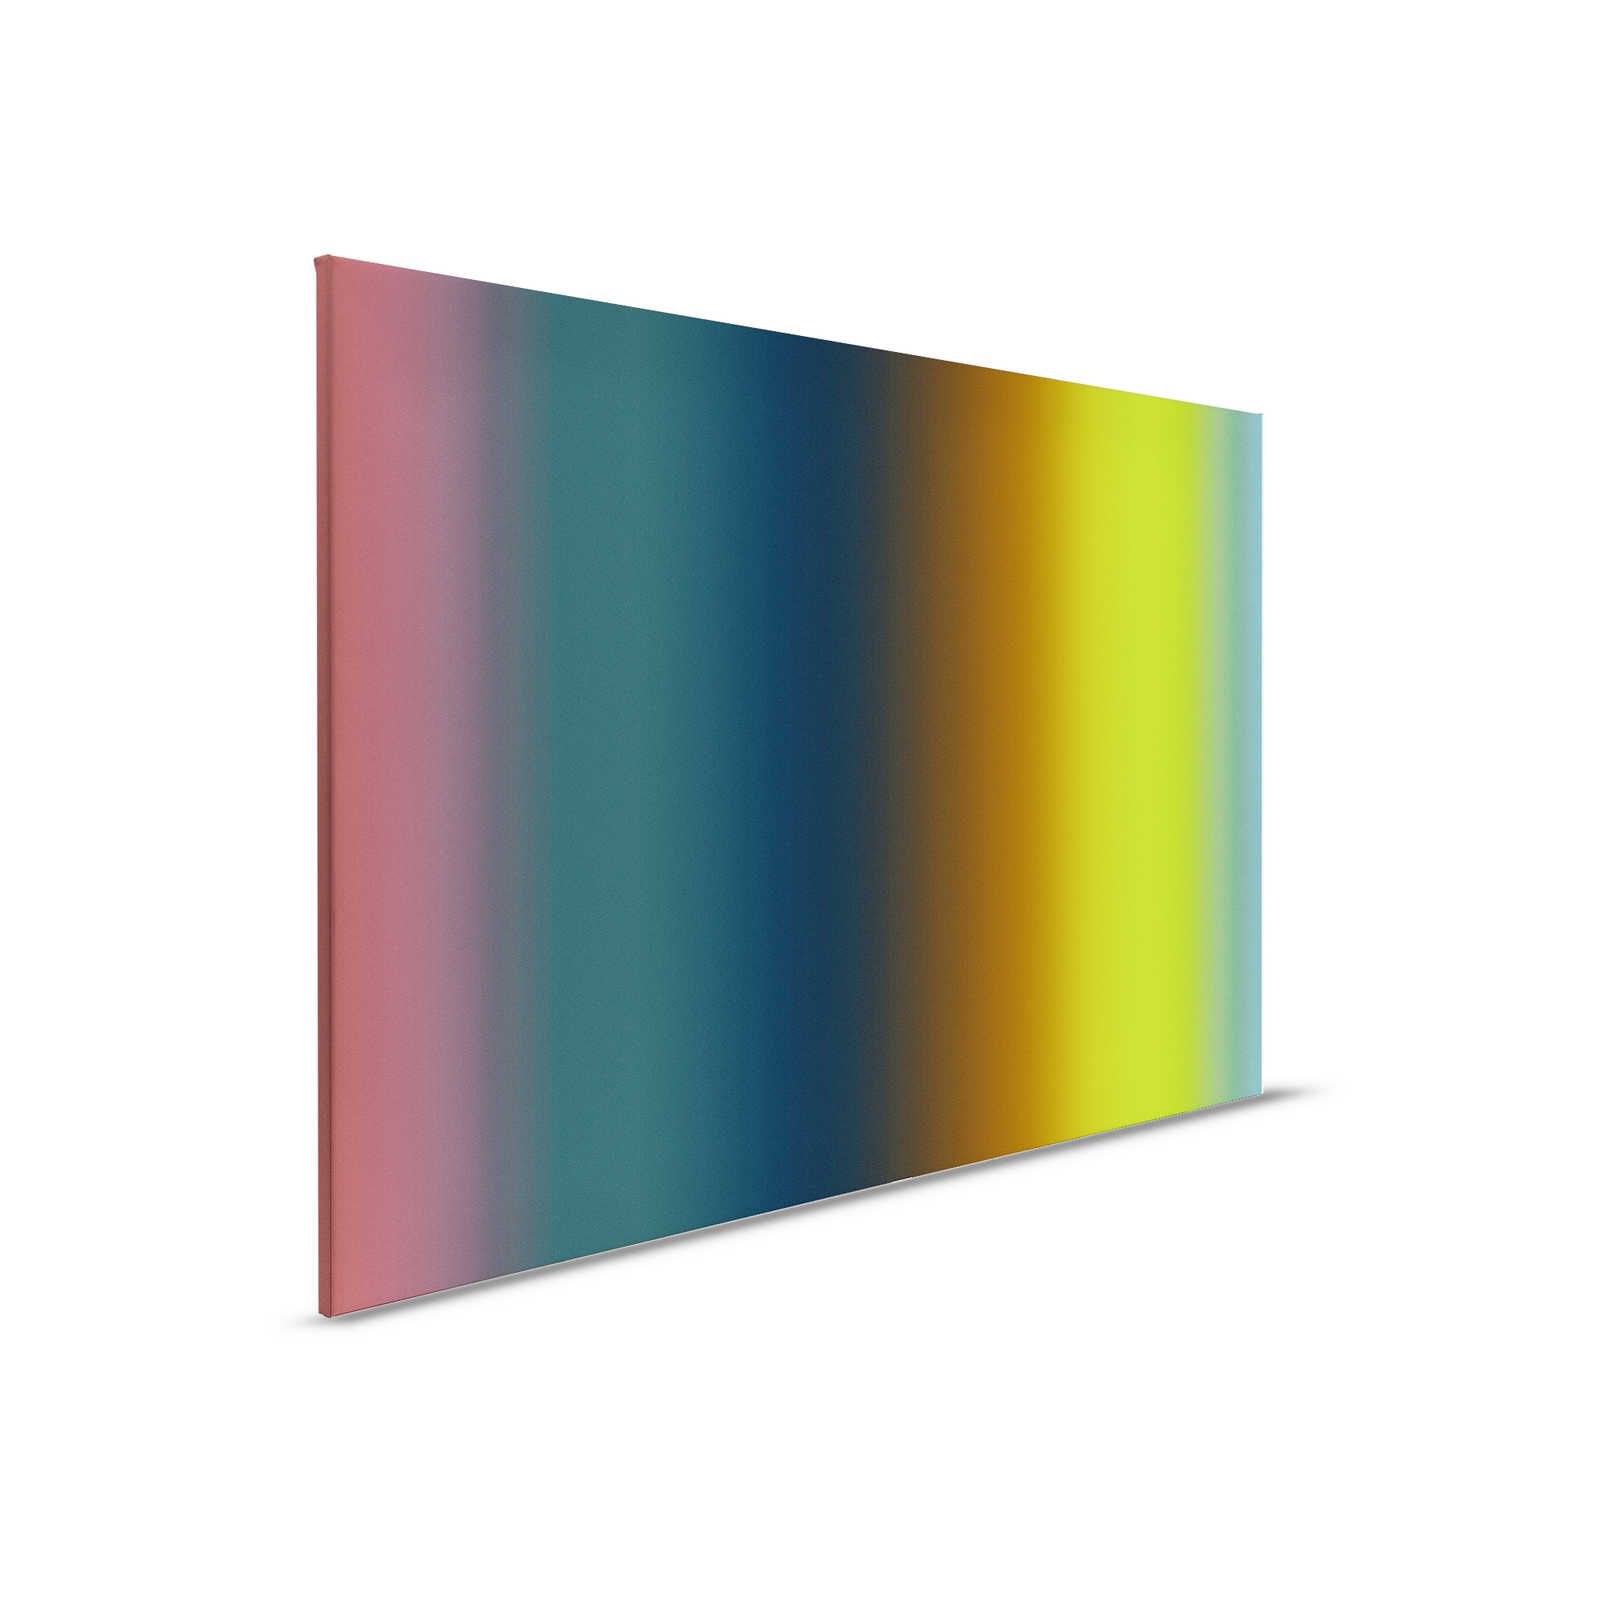         Over the Rainbow 1 - Canvas painting colour spectrum rainbow modern - 0,90 m x 0,60 m
    